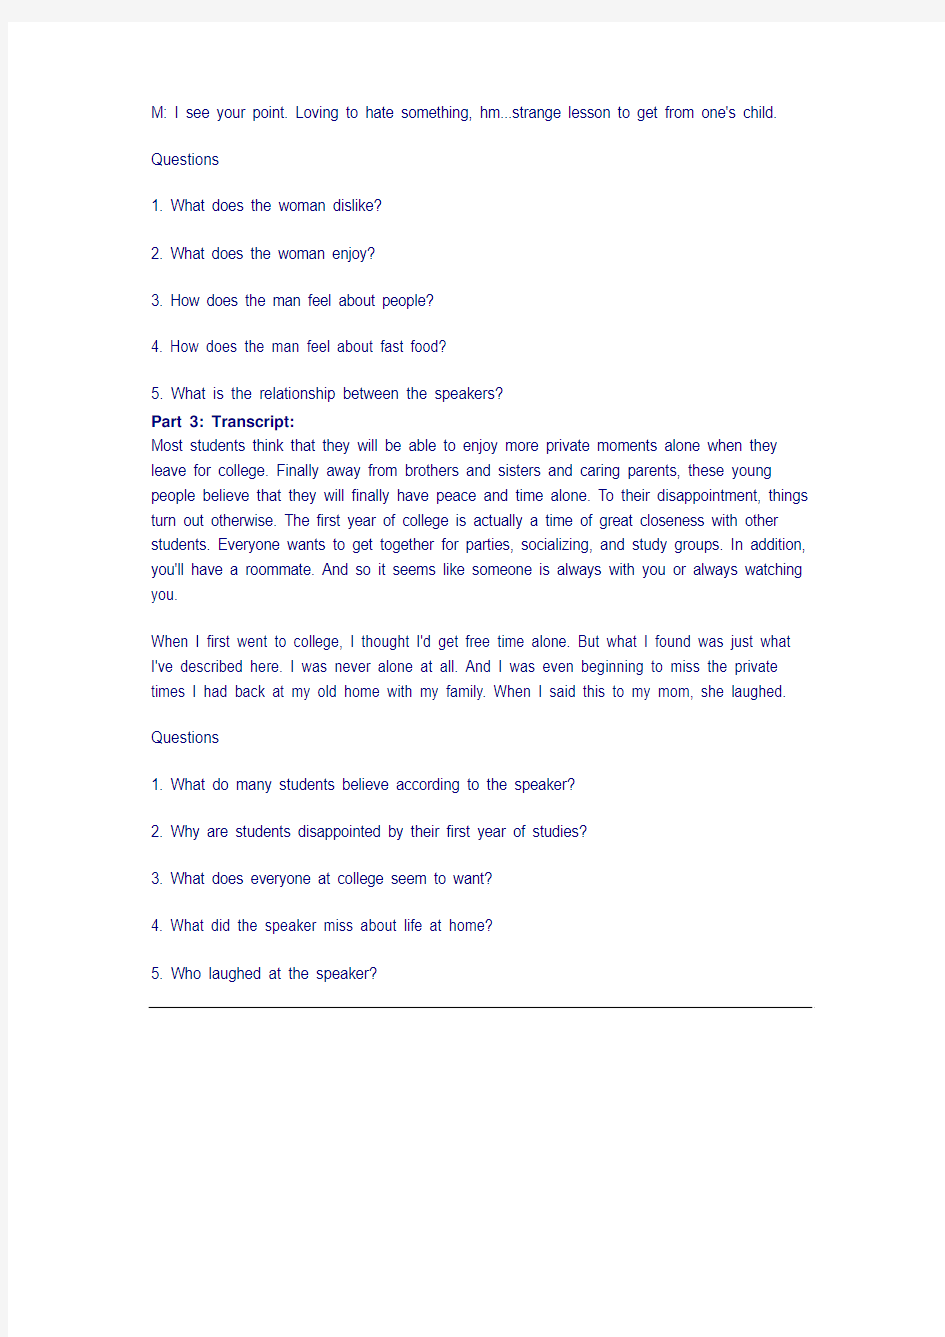 Quiz DX 1卷面和答案